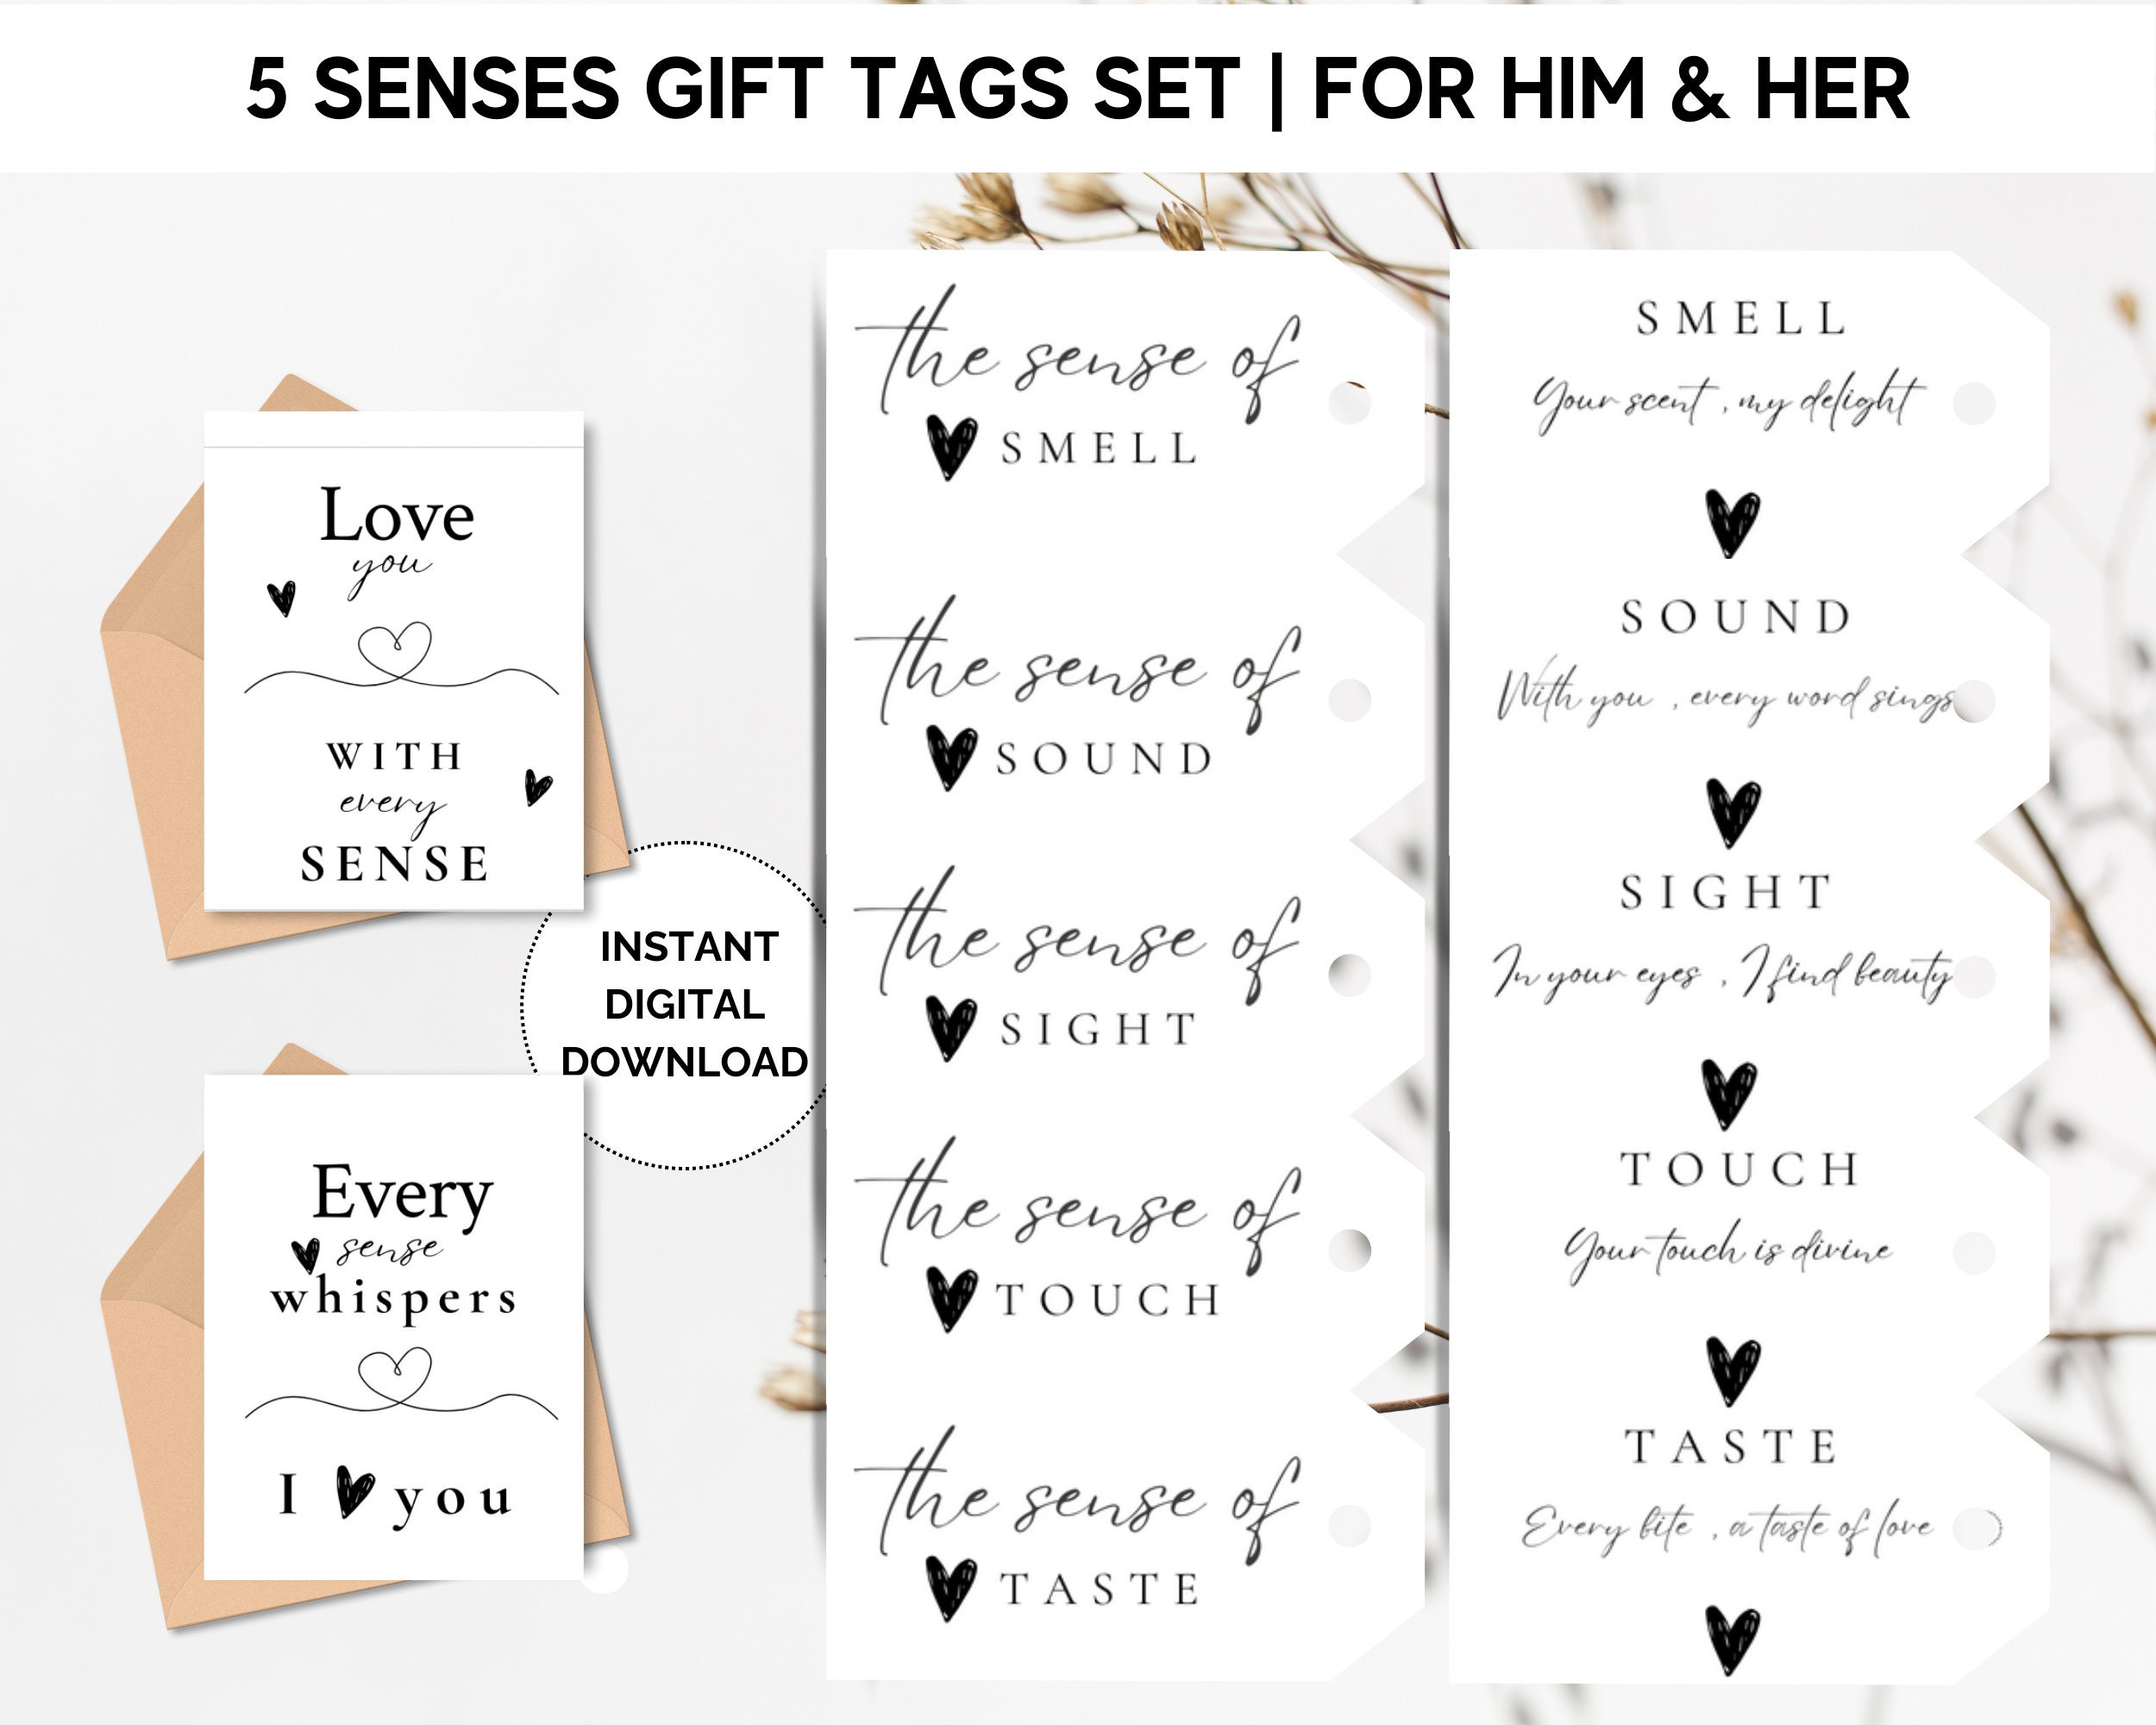 5 senses gift for his birthday . Love this trend #fivesensesgift